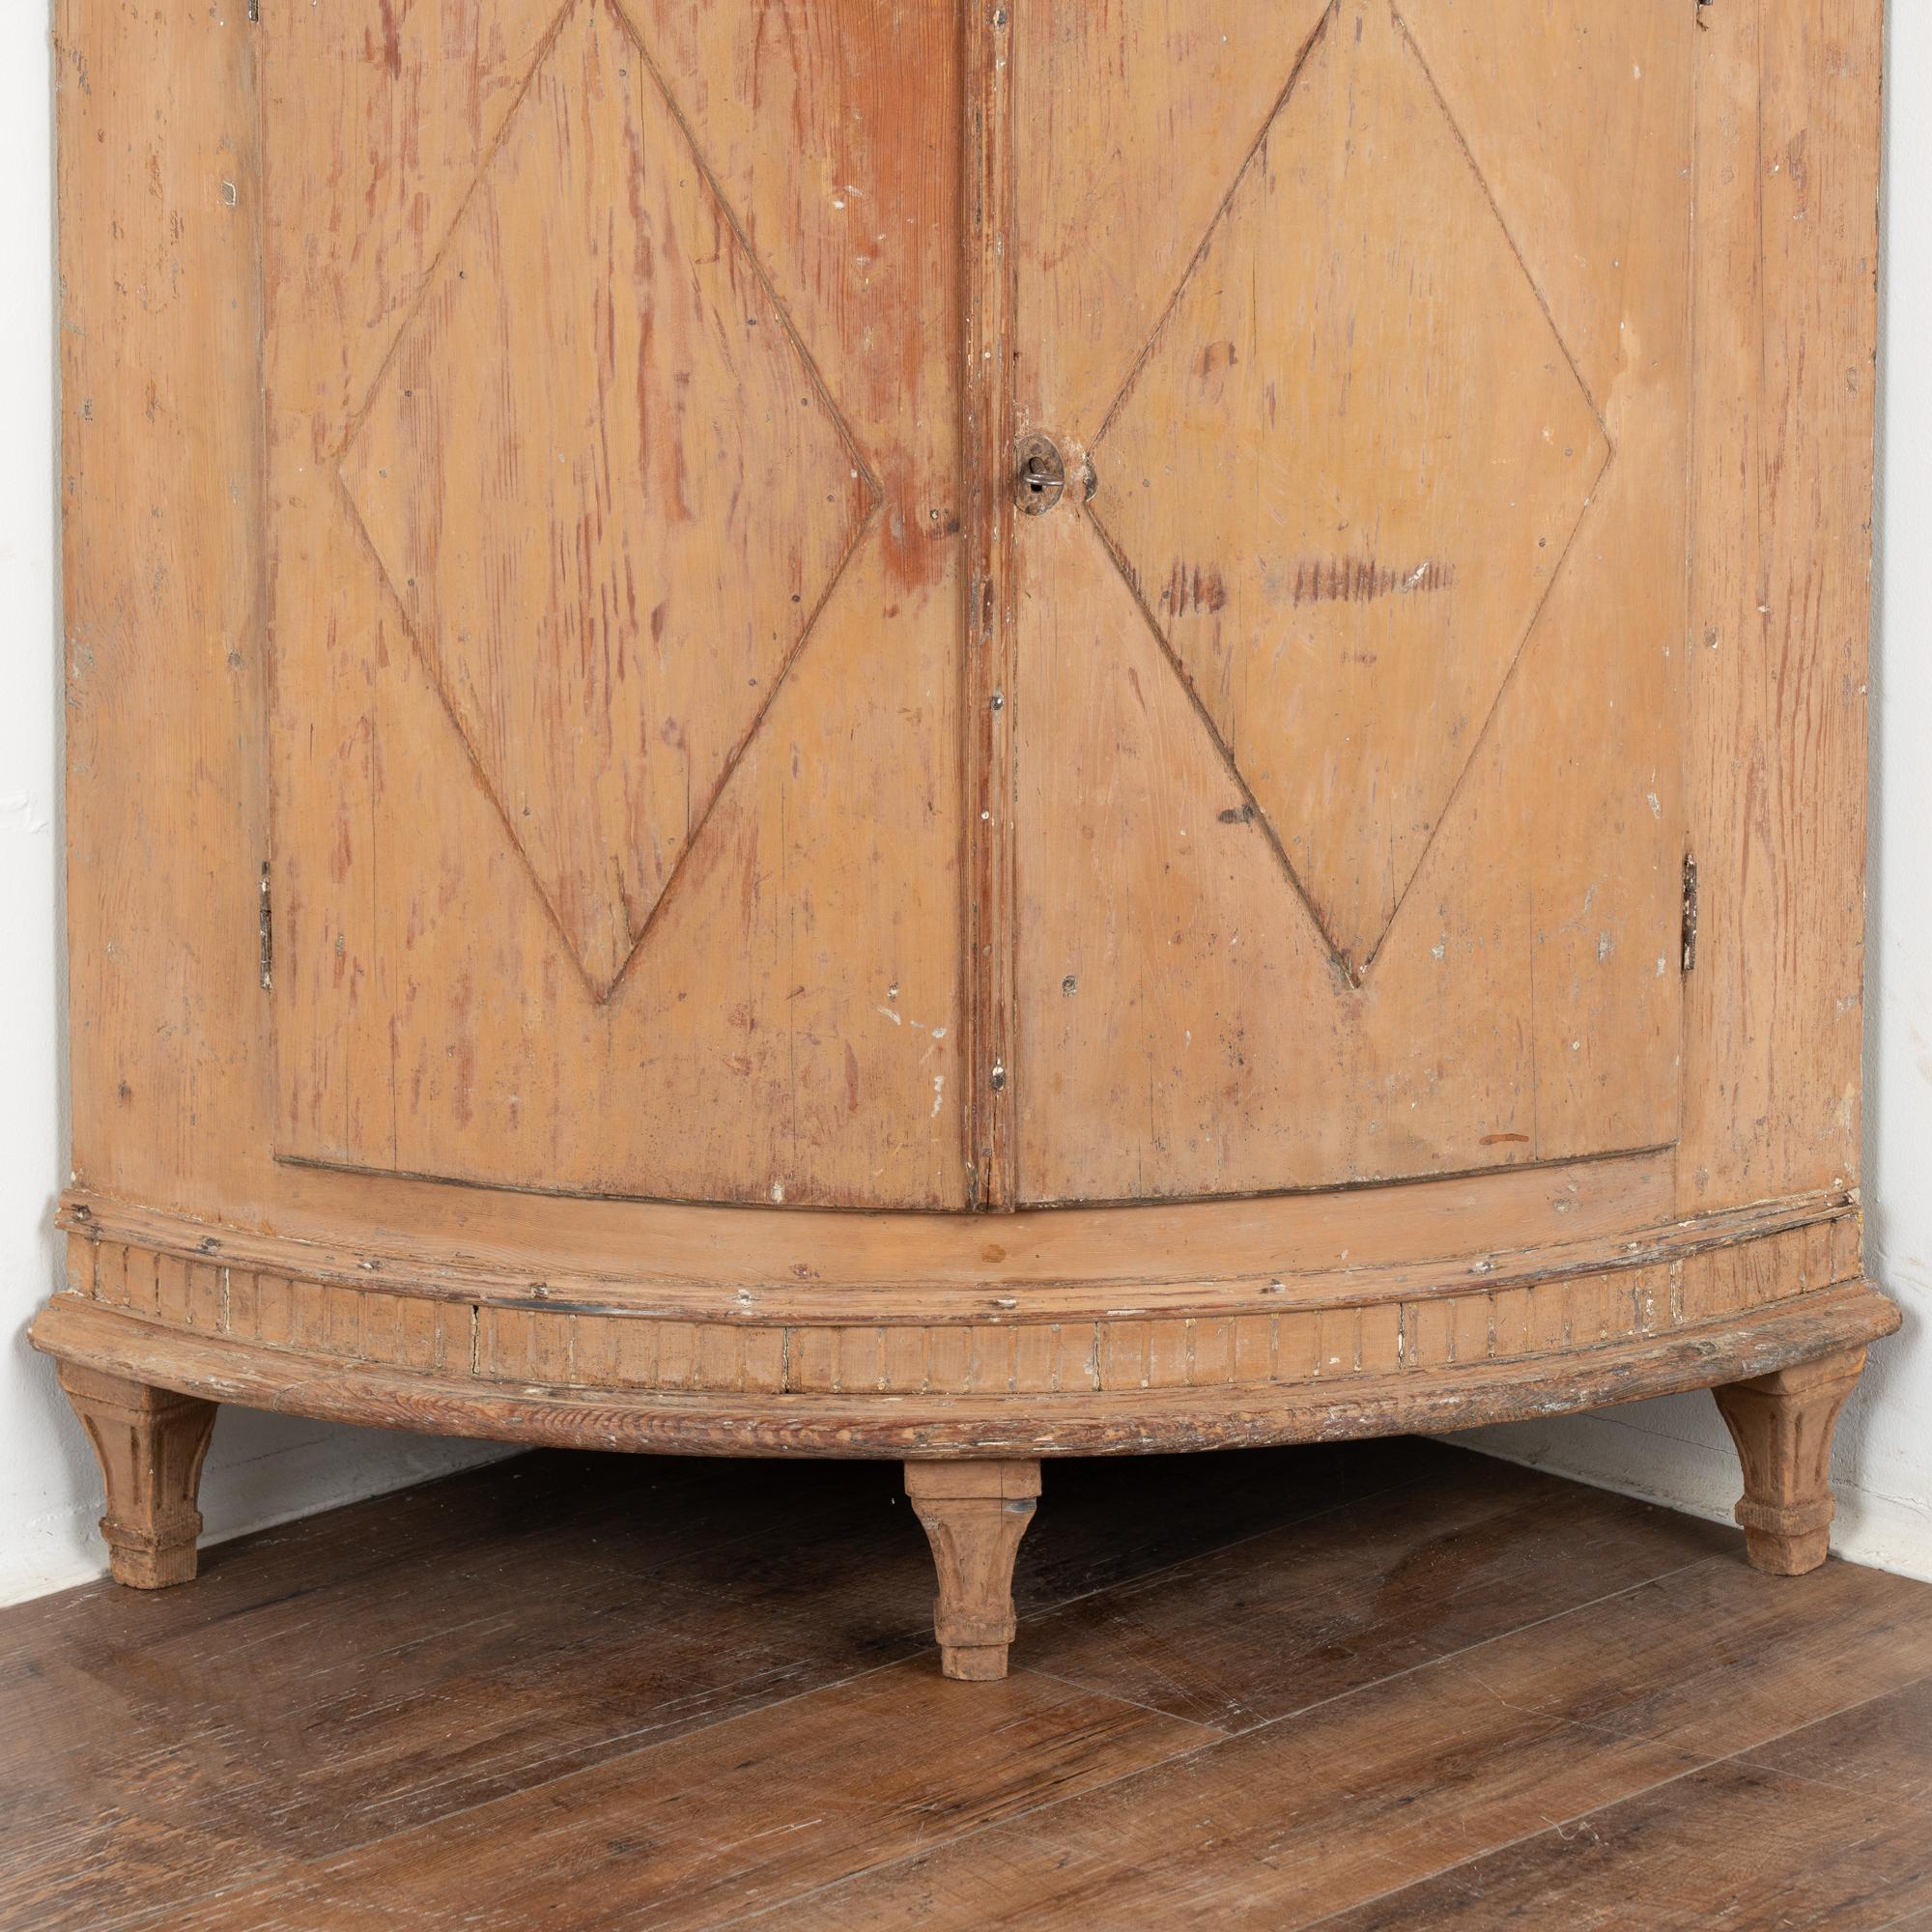 Pine Original Painted Corner Cabinet from Sweden, circa 1820-40